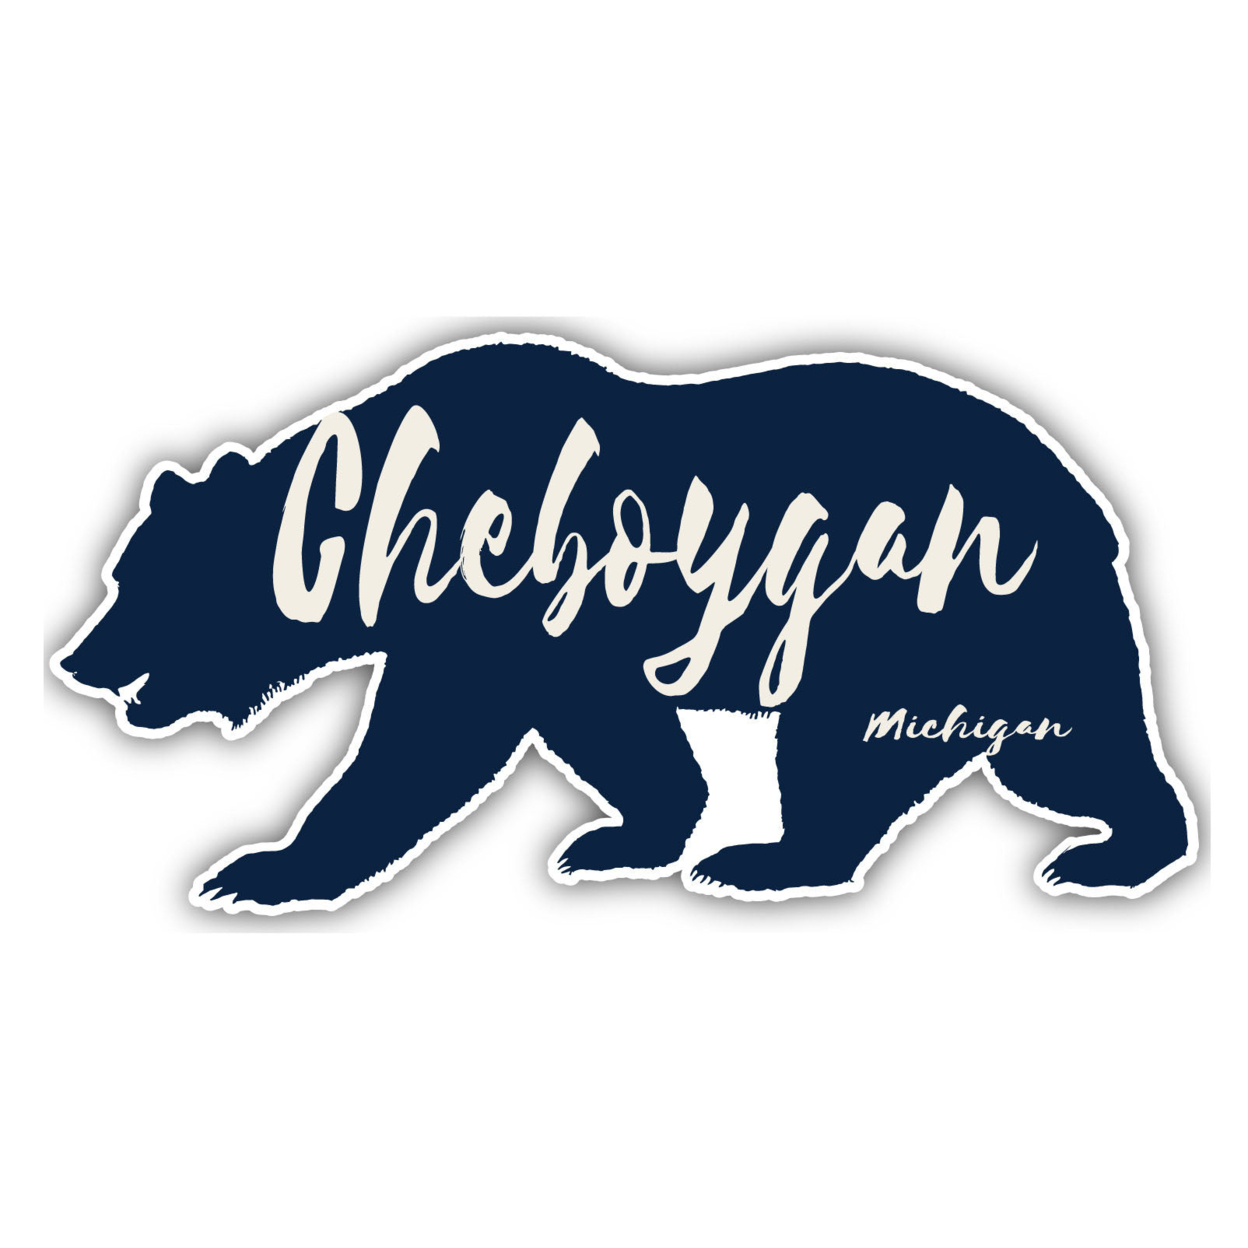 Cheboygan Michigan Souvenir Decorative Stickers (Choose Theme And Size) - Single Unit, 6-Inch, Great Outdoors